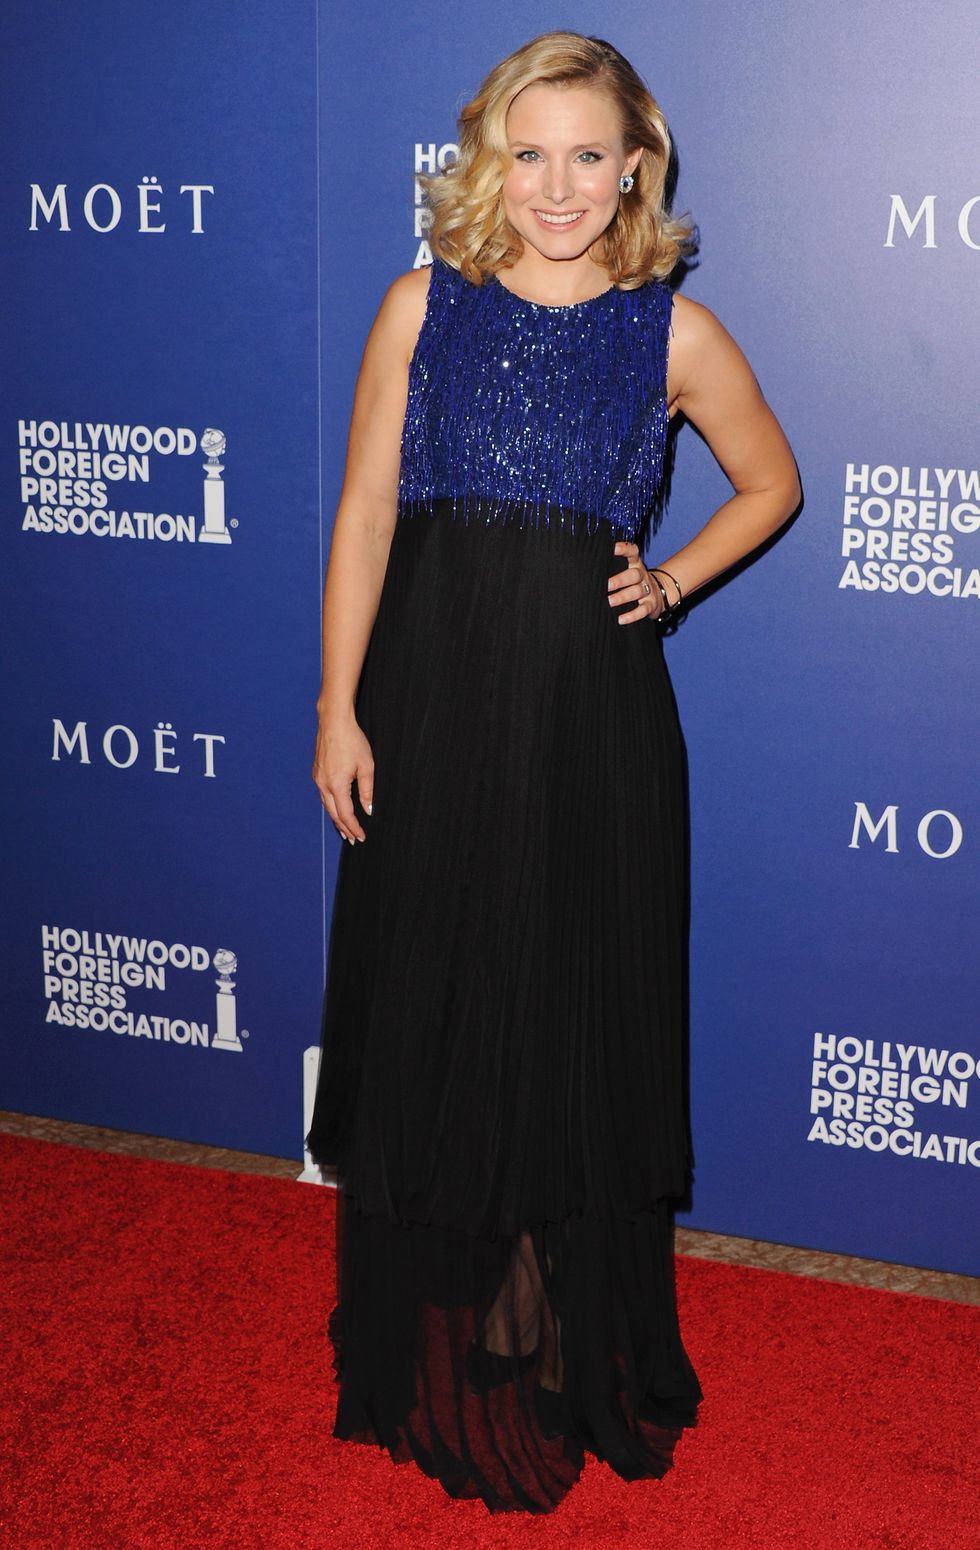 Kristen Bell wearing Andrew Gn sleeveless gown